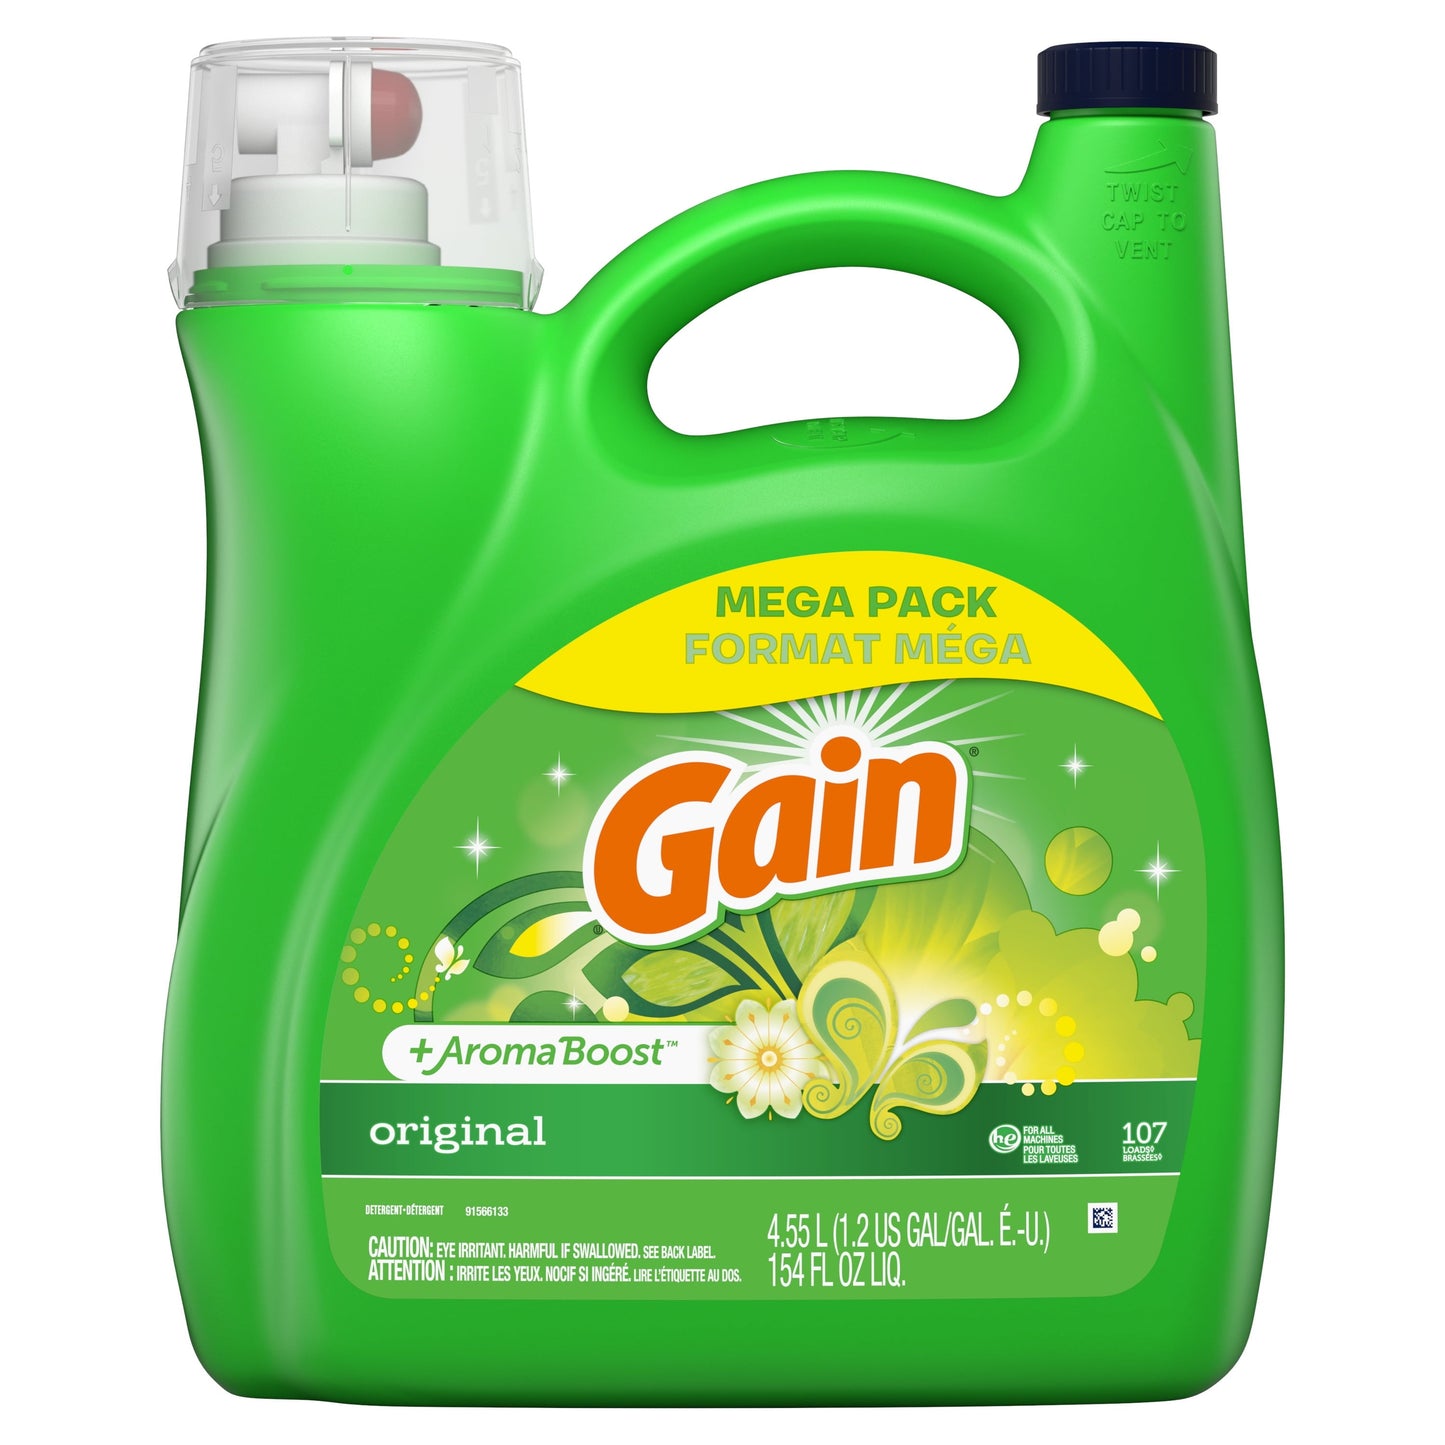 Gain + Aroma Boost Liquid Laundry Detergent, Original Scent, 107 Loads, 154 fl oz